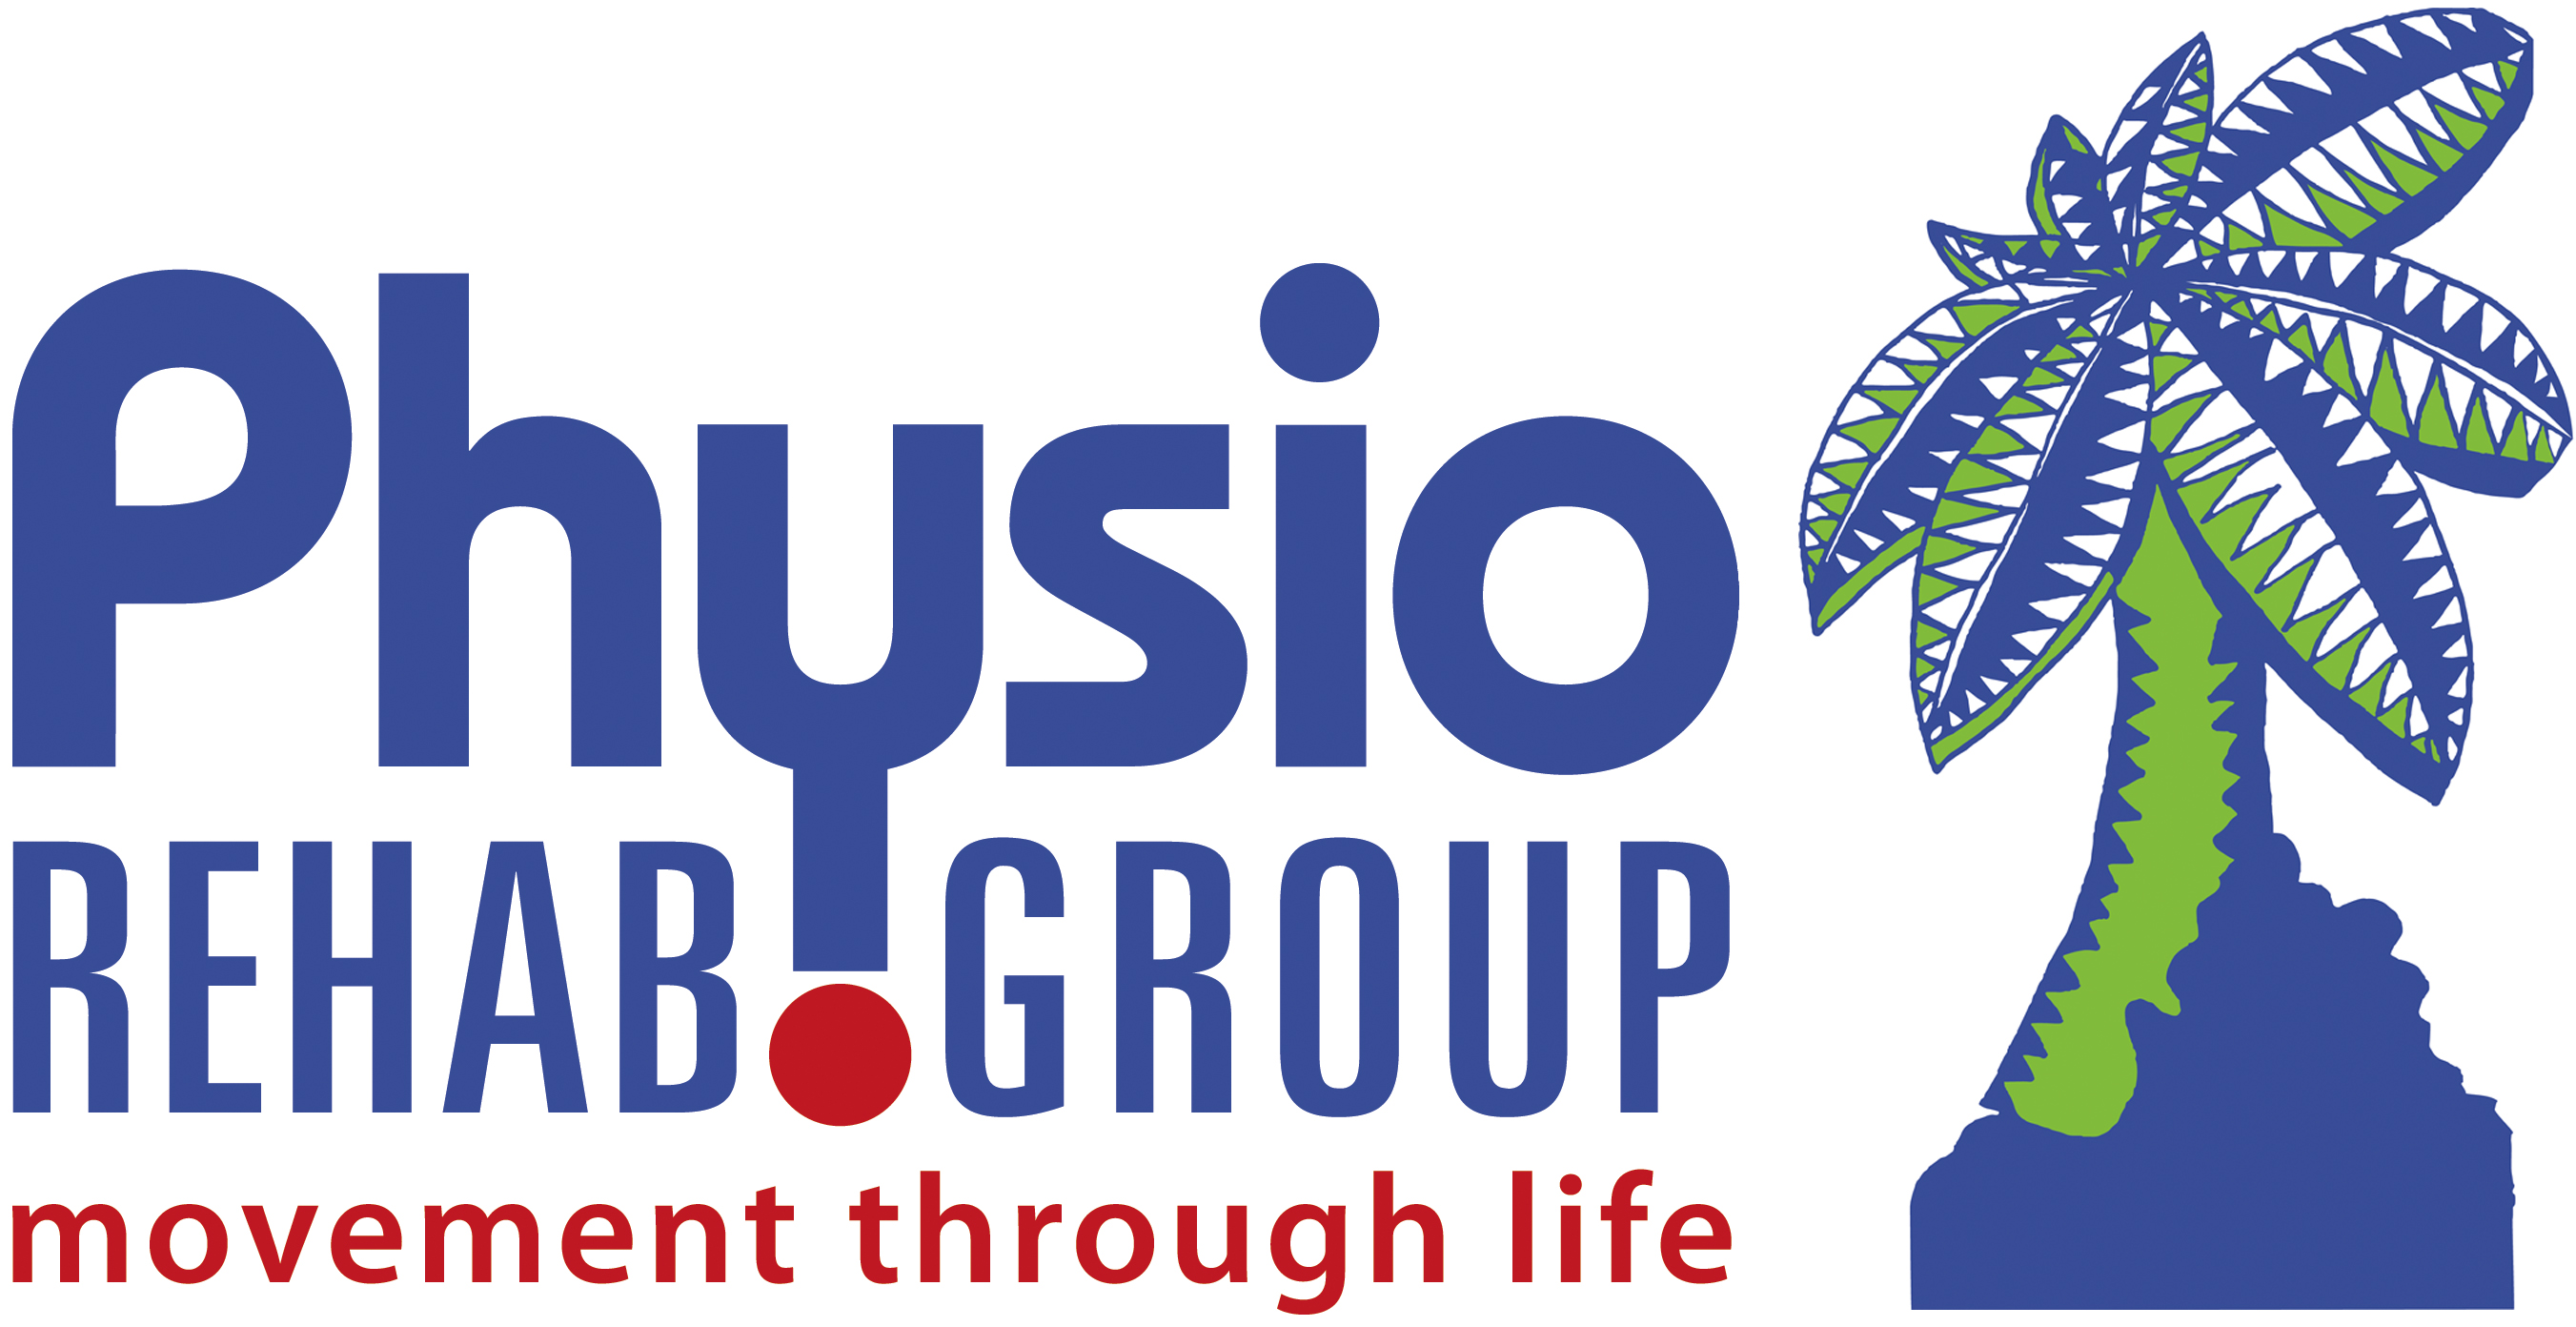 Physio Rehab Group